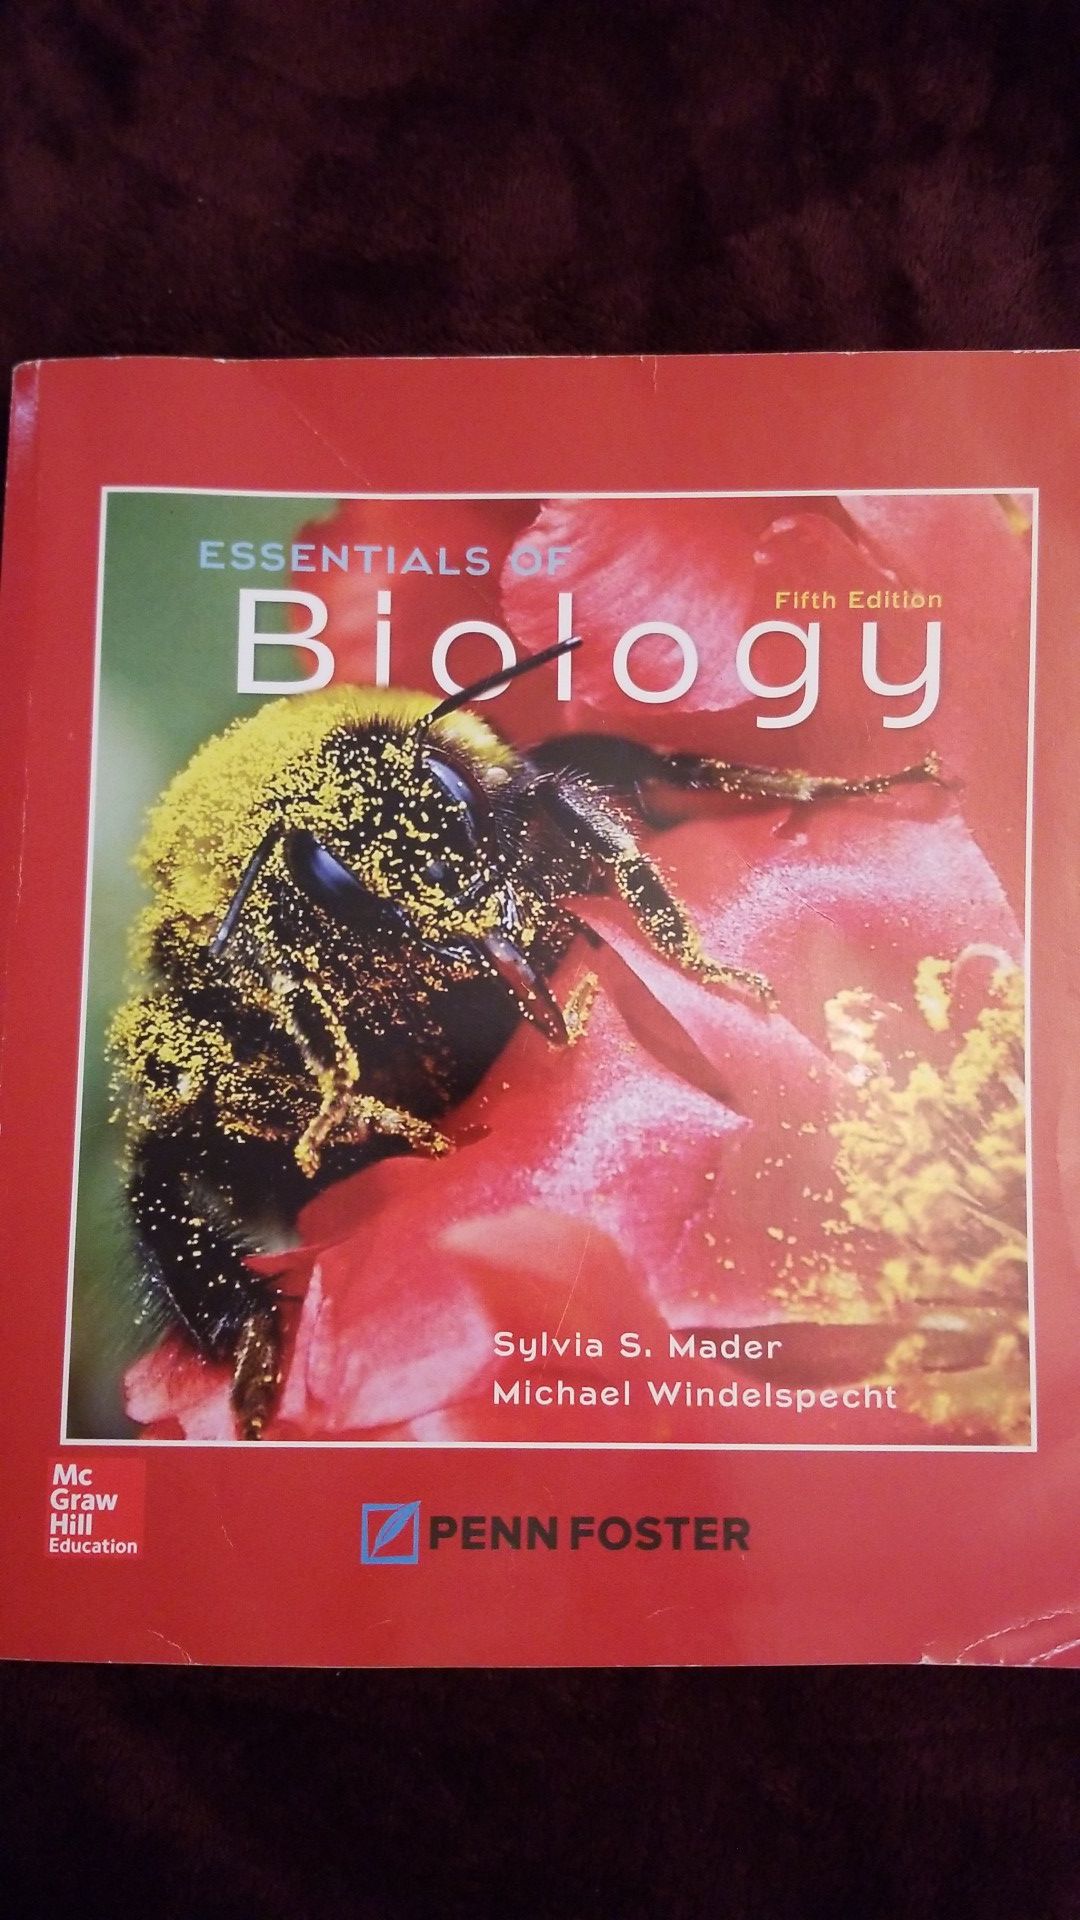 Penn Foster: Essentials of Biology 5th edition